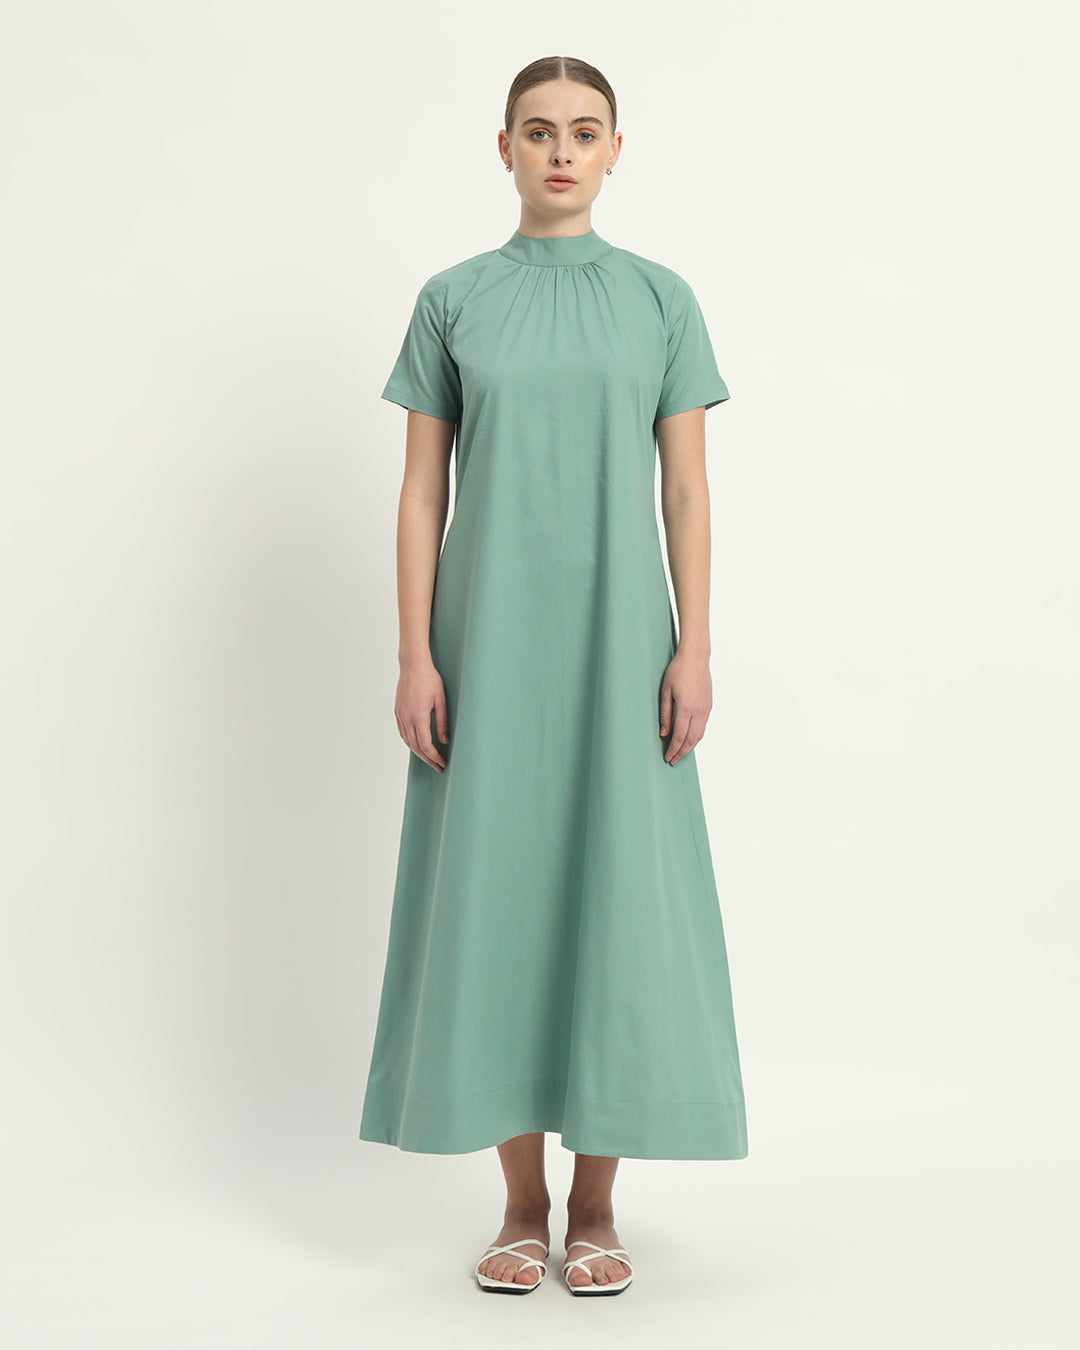 The Mint Hermon Cotton Dress